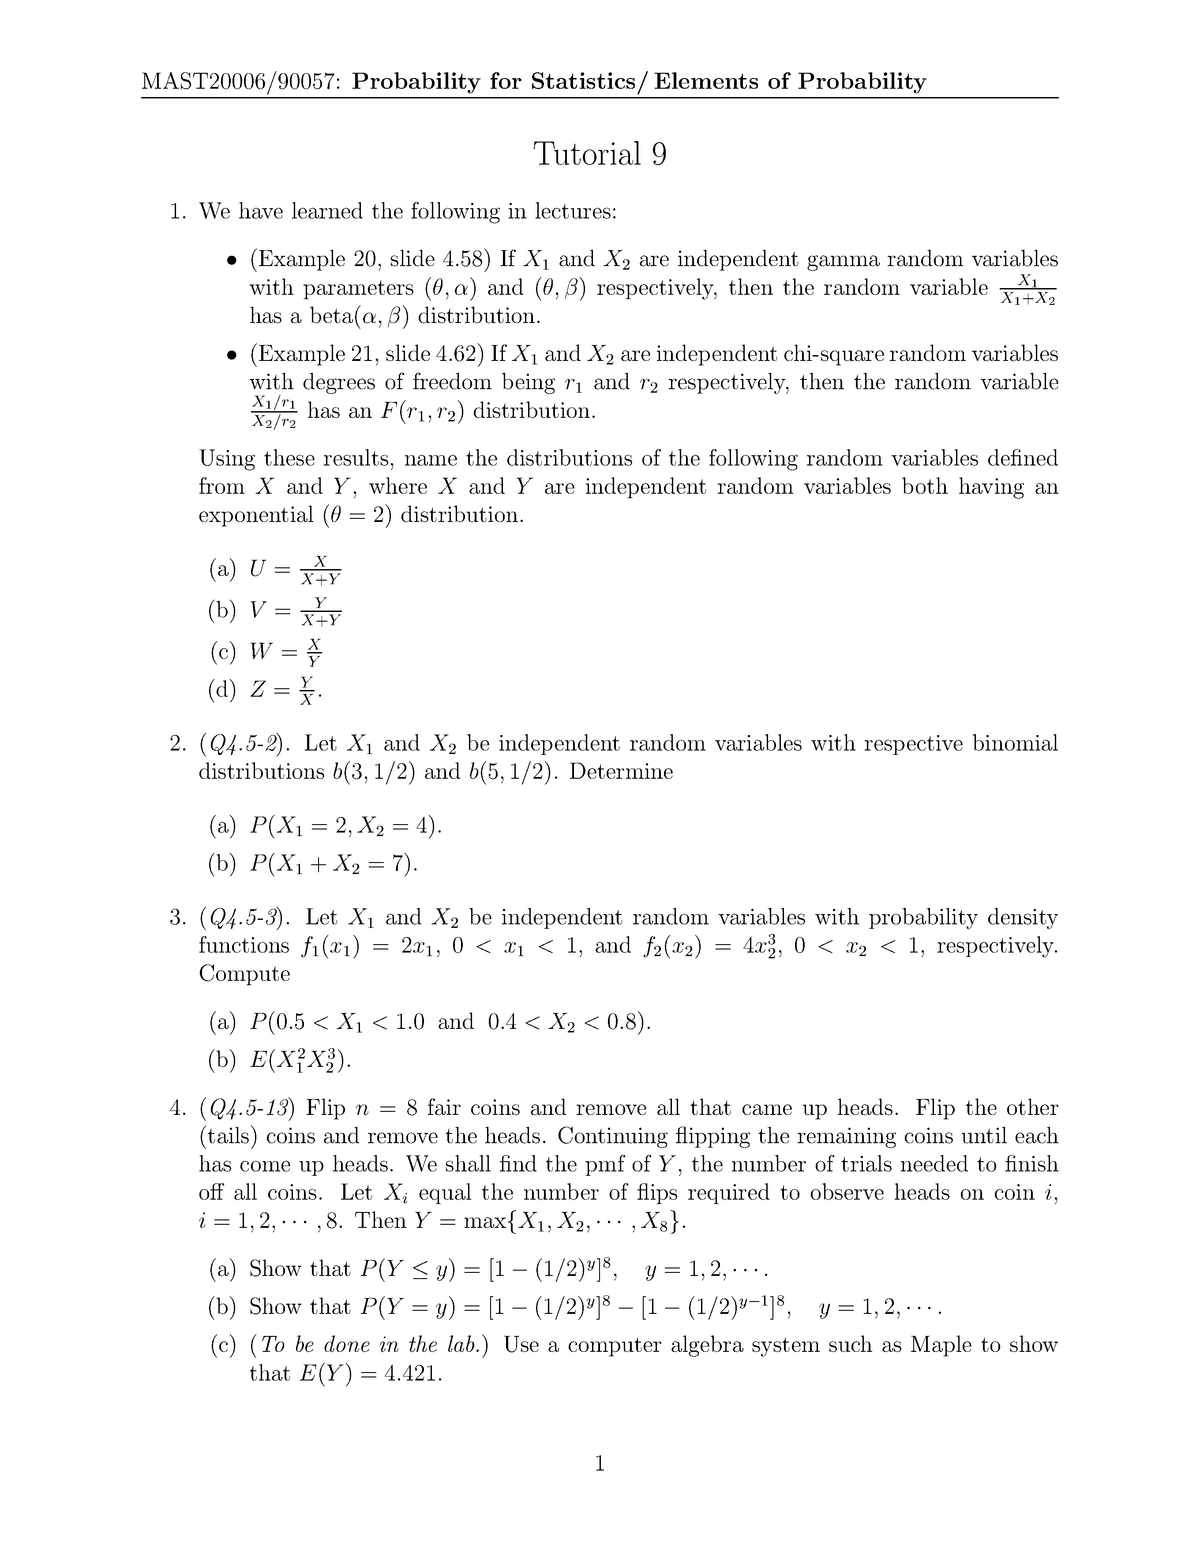 Tutorial 9 Questions Mast006 Probability For Statistics Elements Of Probability Tutorial Studocu